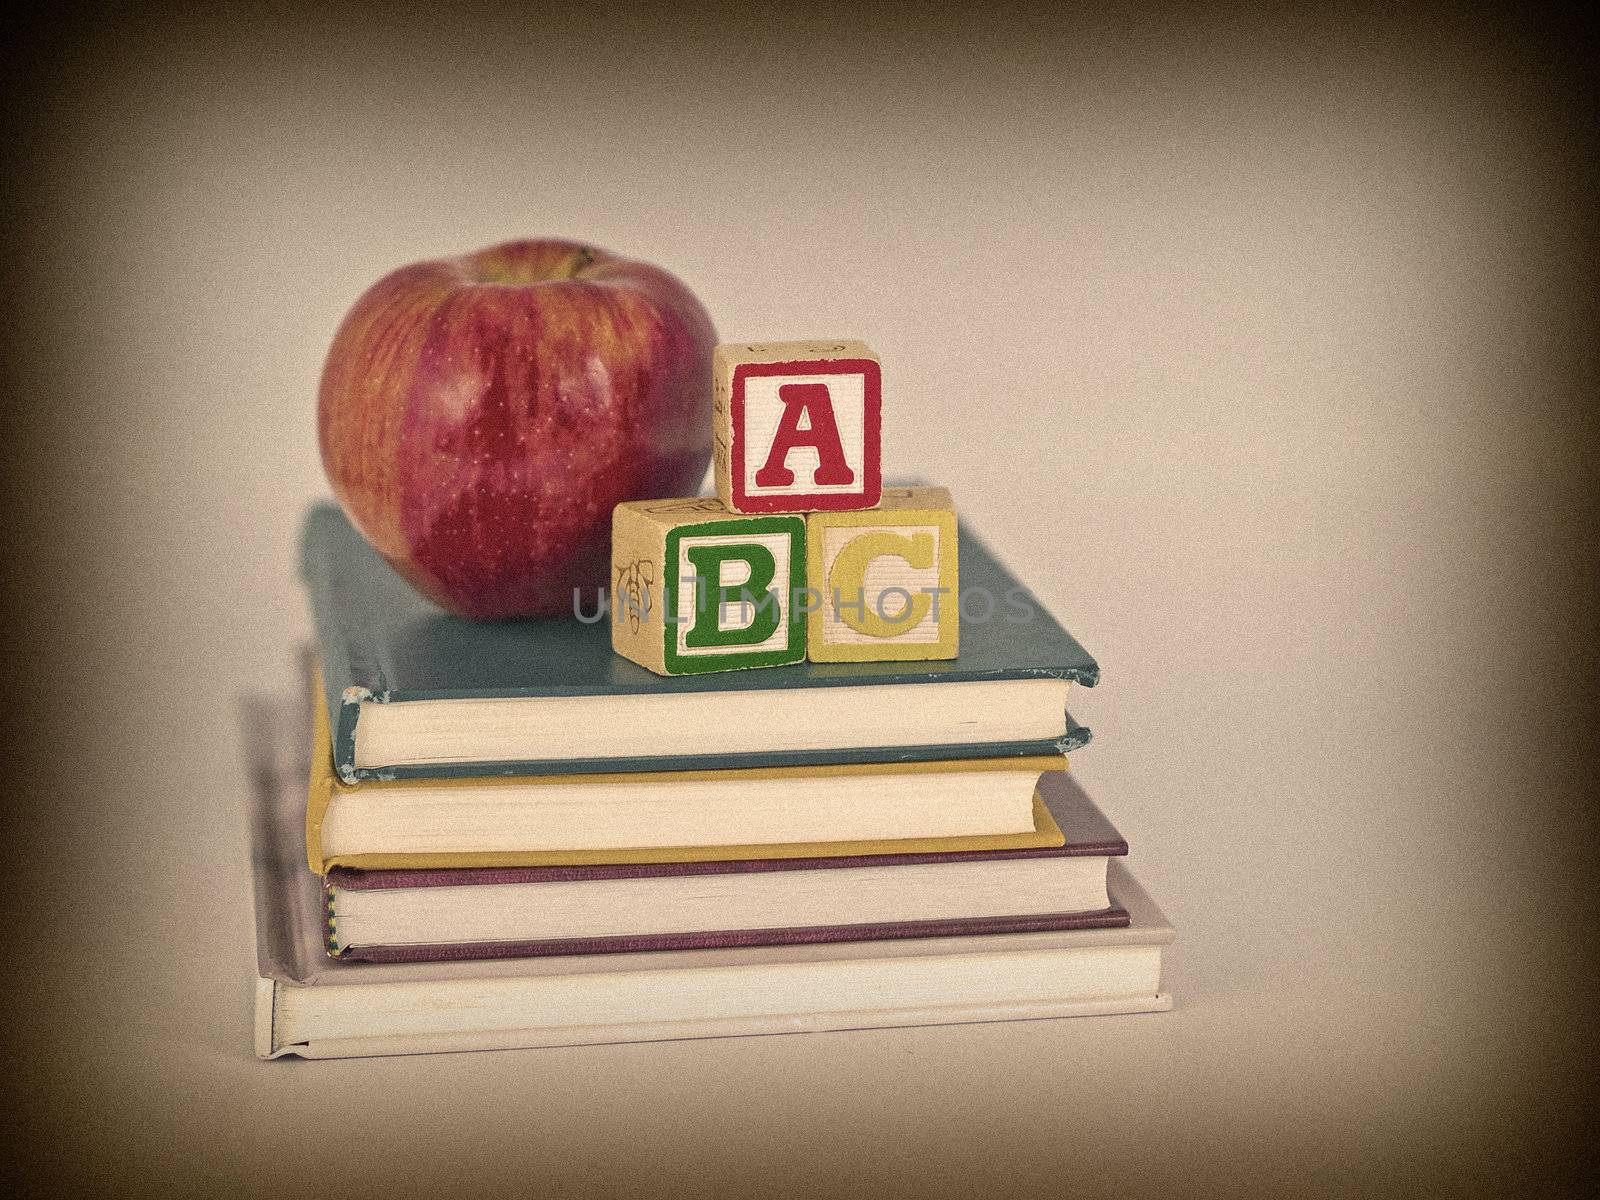 ABC Blocks and Apple on Children's Books Sepia Style by Frankljunior